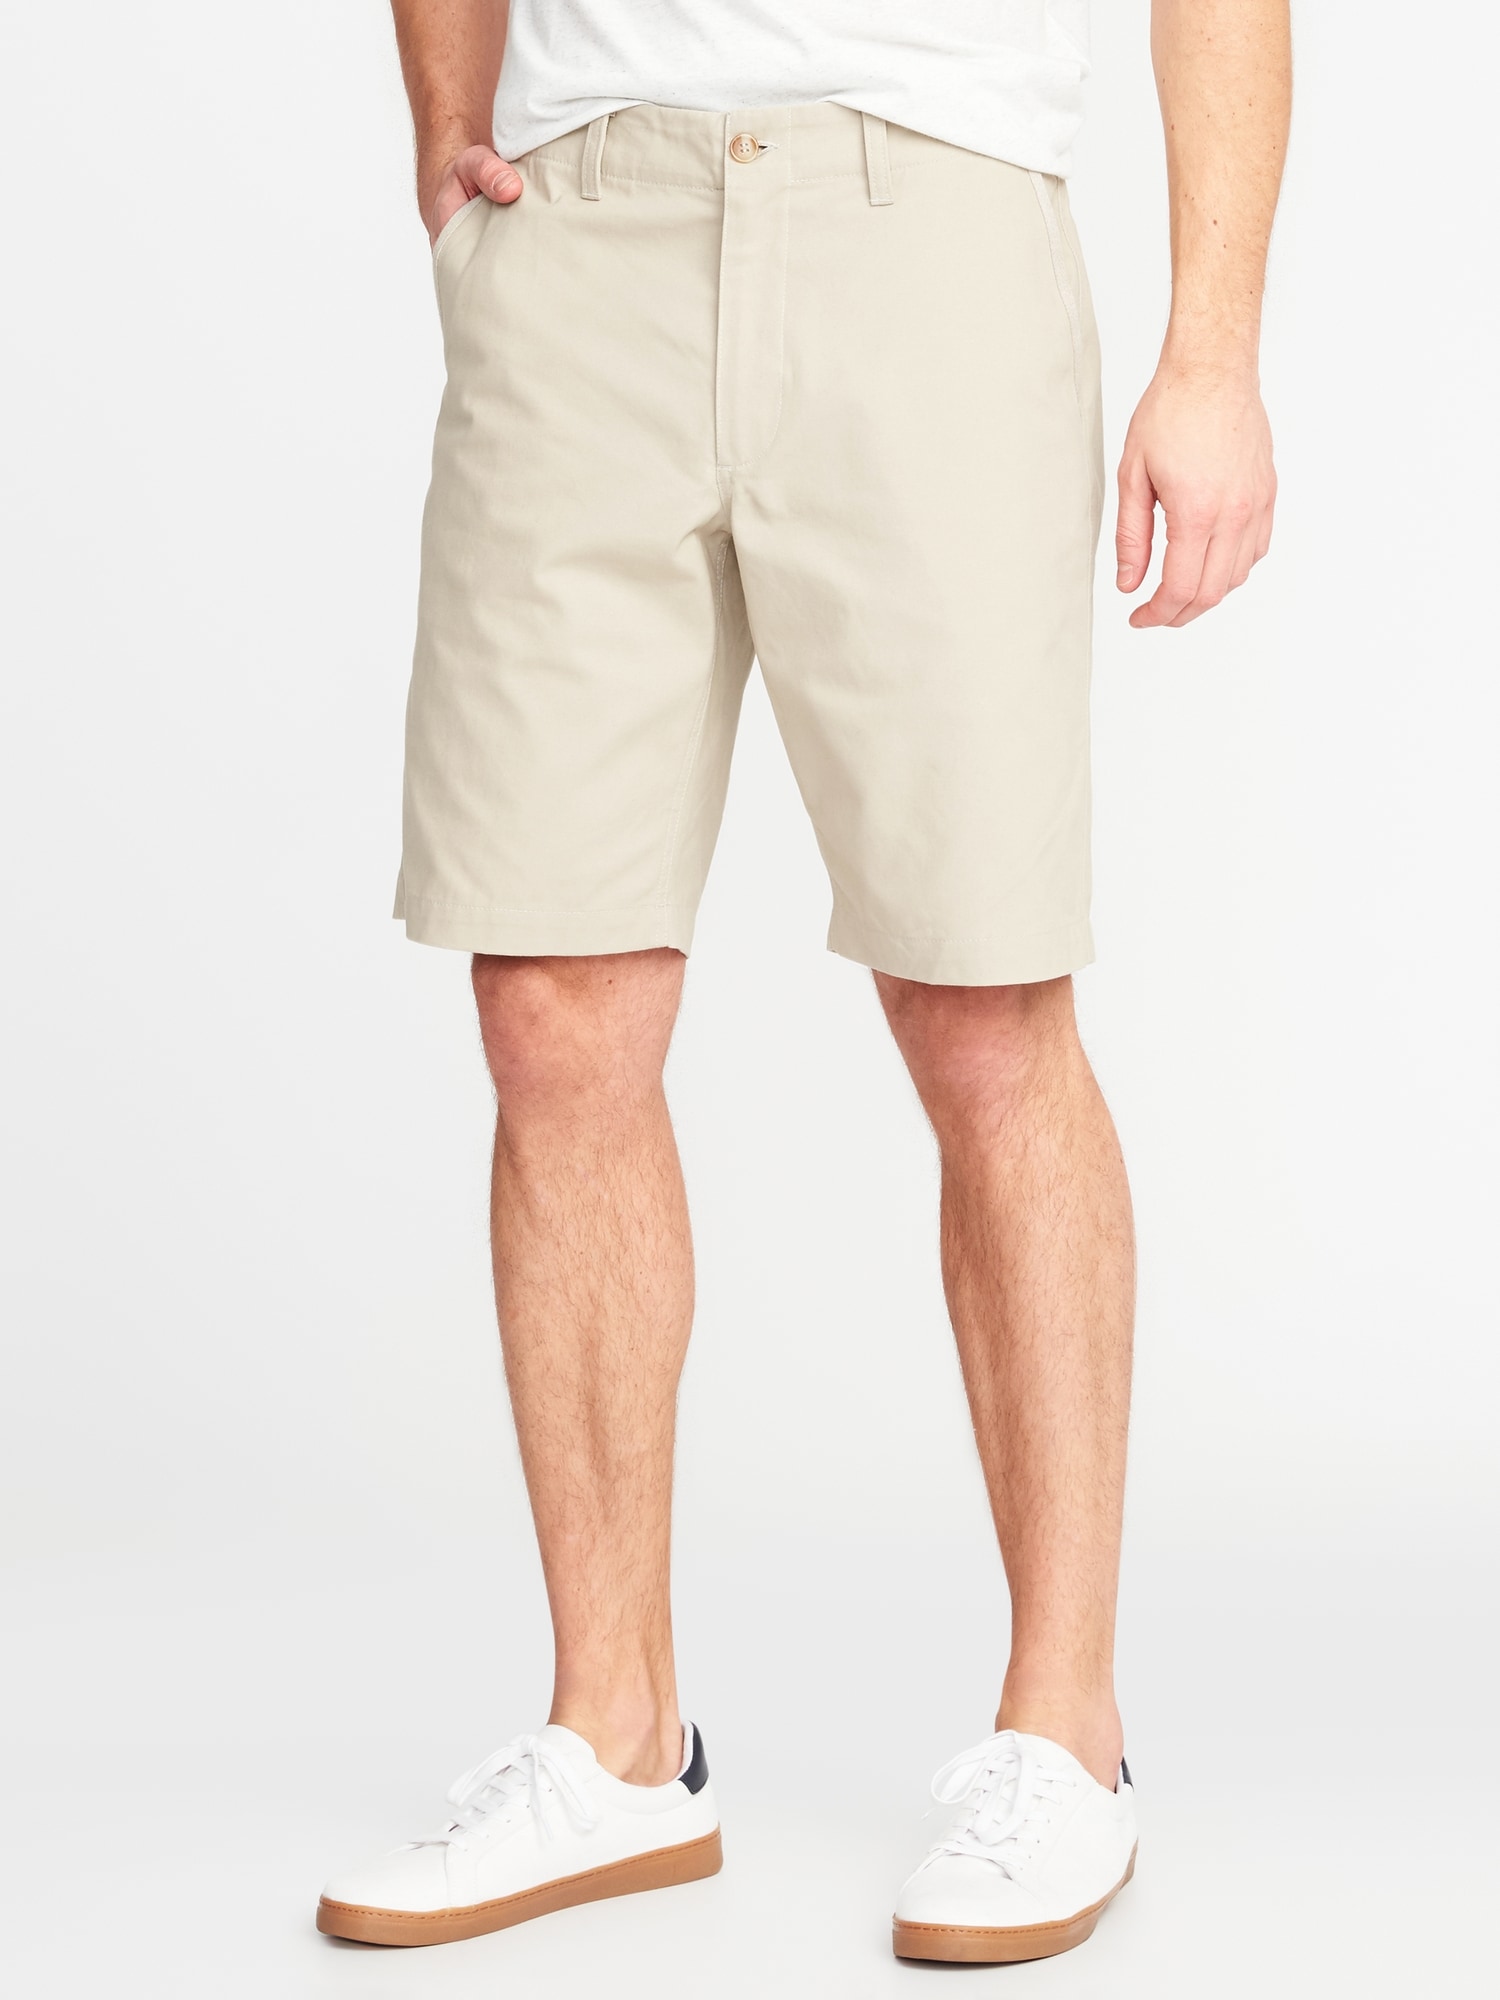 Khaki Shorts for Men - 10-inch inseam 